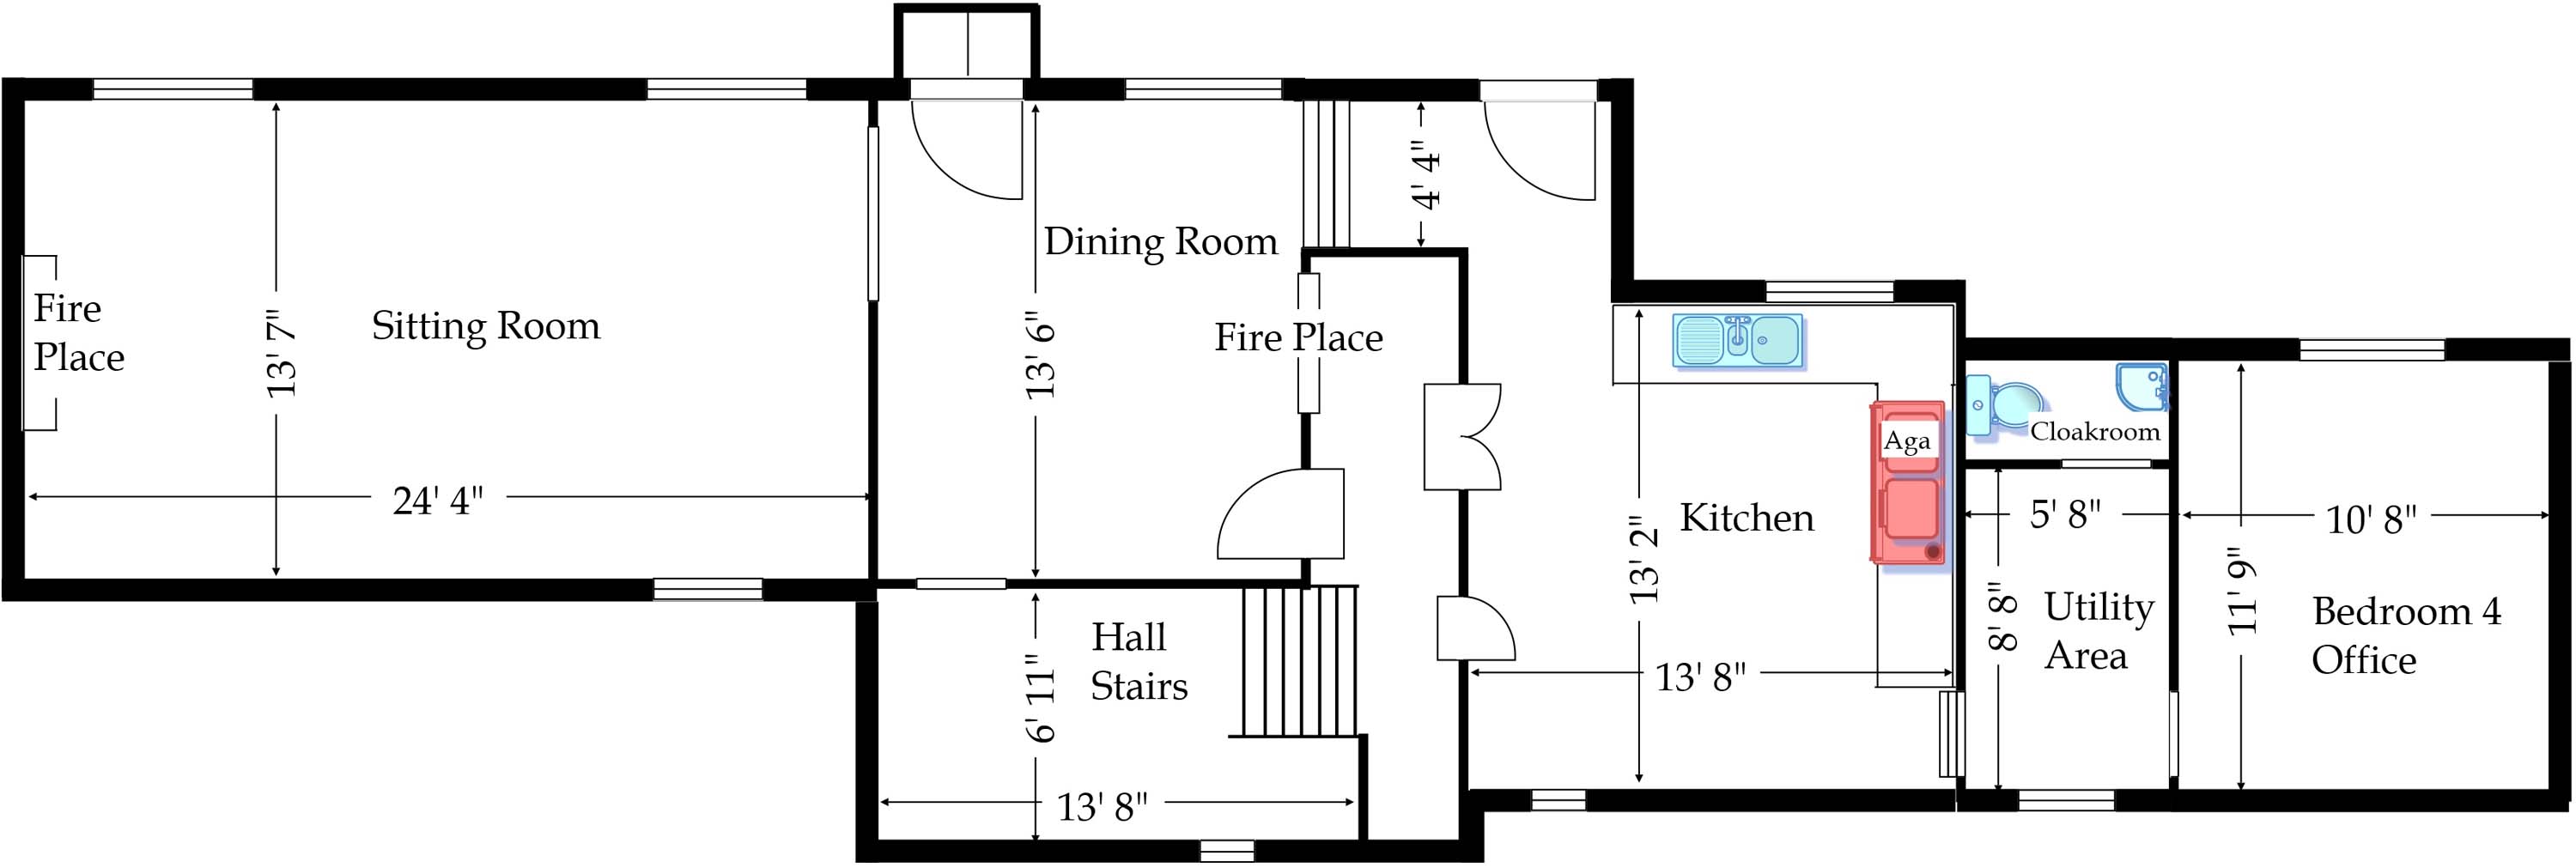 Harry's House Ground Floor Layout Plan